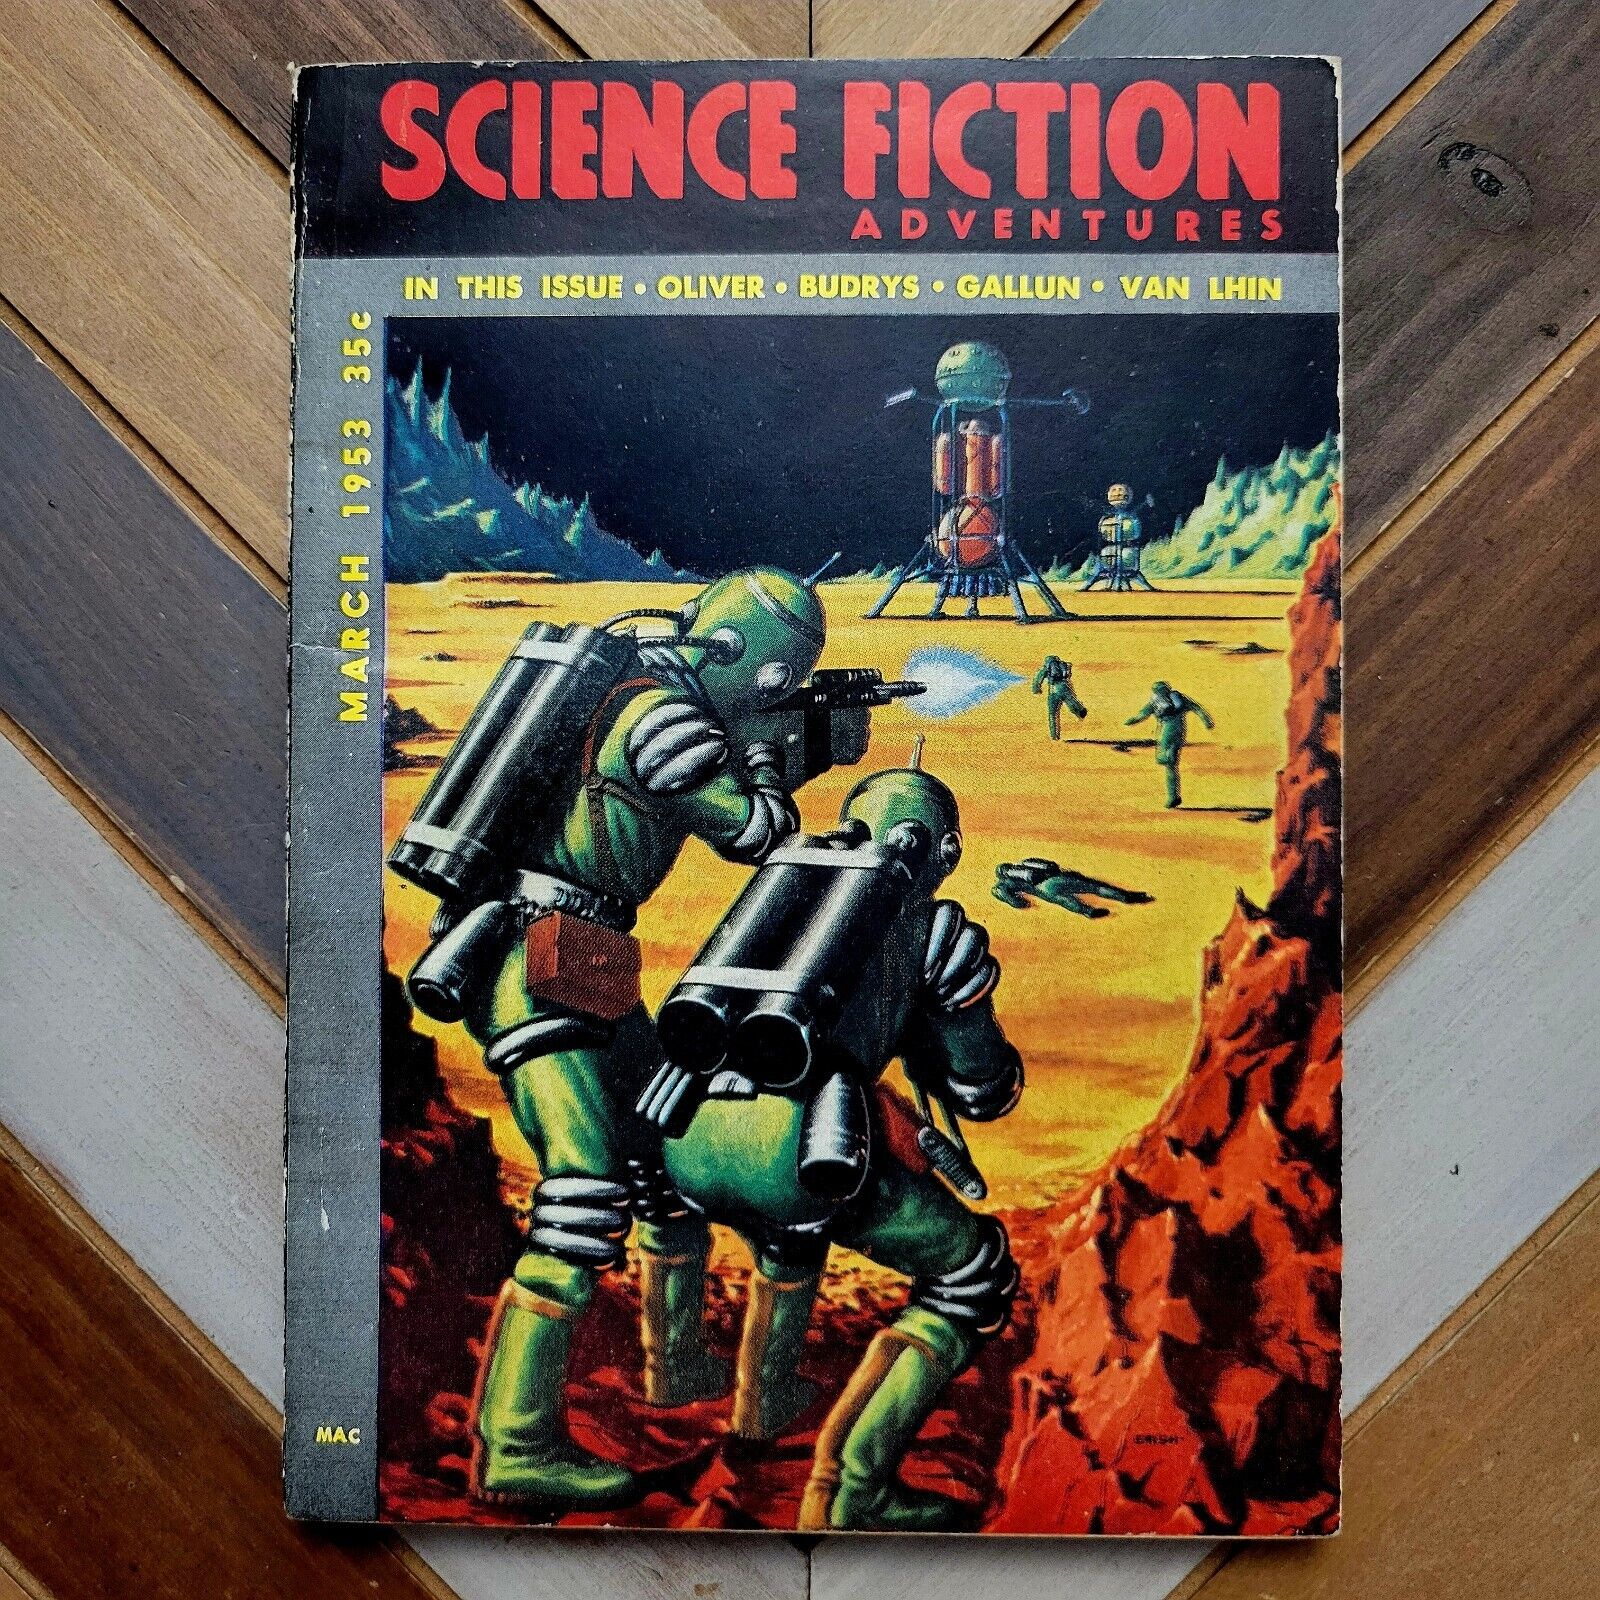 Science Fiction Adventures Vol.1 #3 FN (Mar 1953) Oliver, Budrys, Van Lhin, Pulp